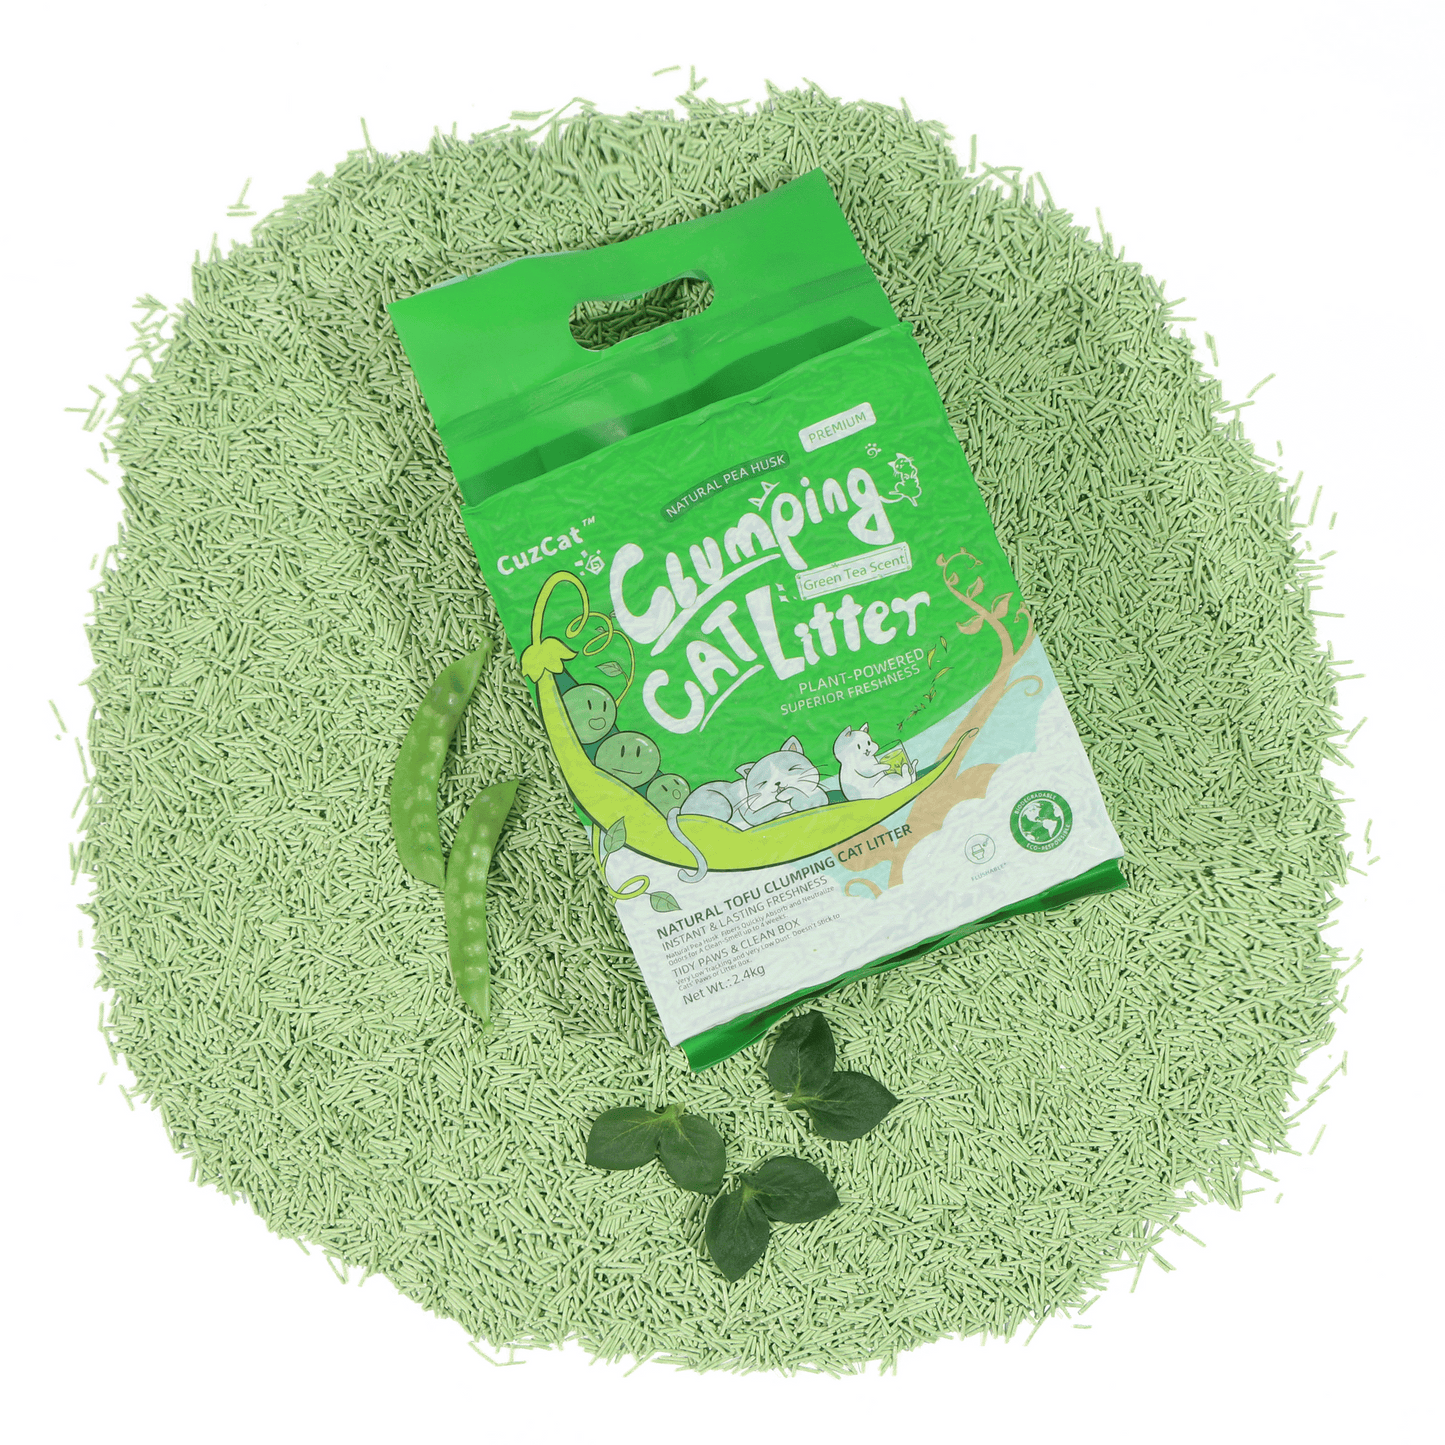 CuzCat Green Tea Pea Husk Clumping Cat Litter 6L (Bundle of 6)